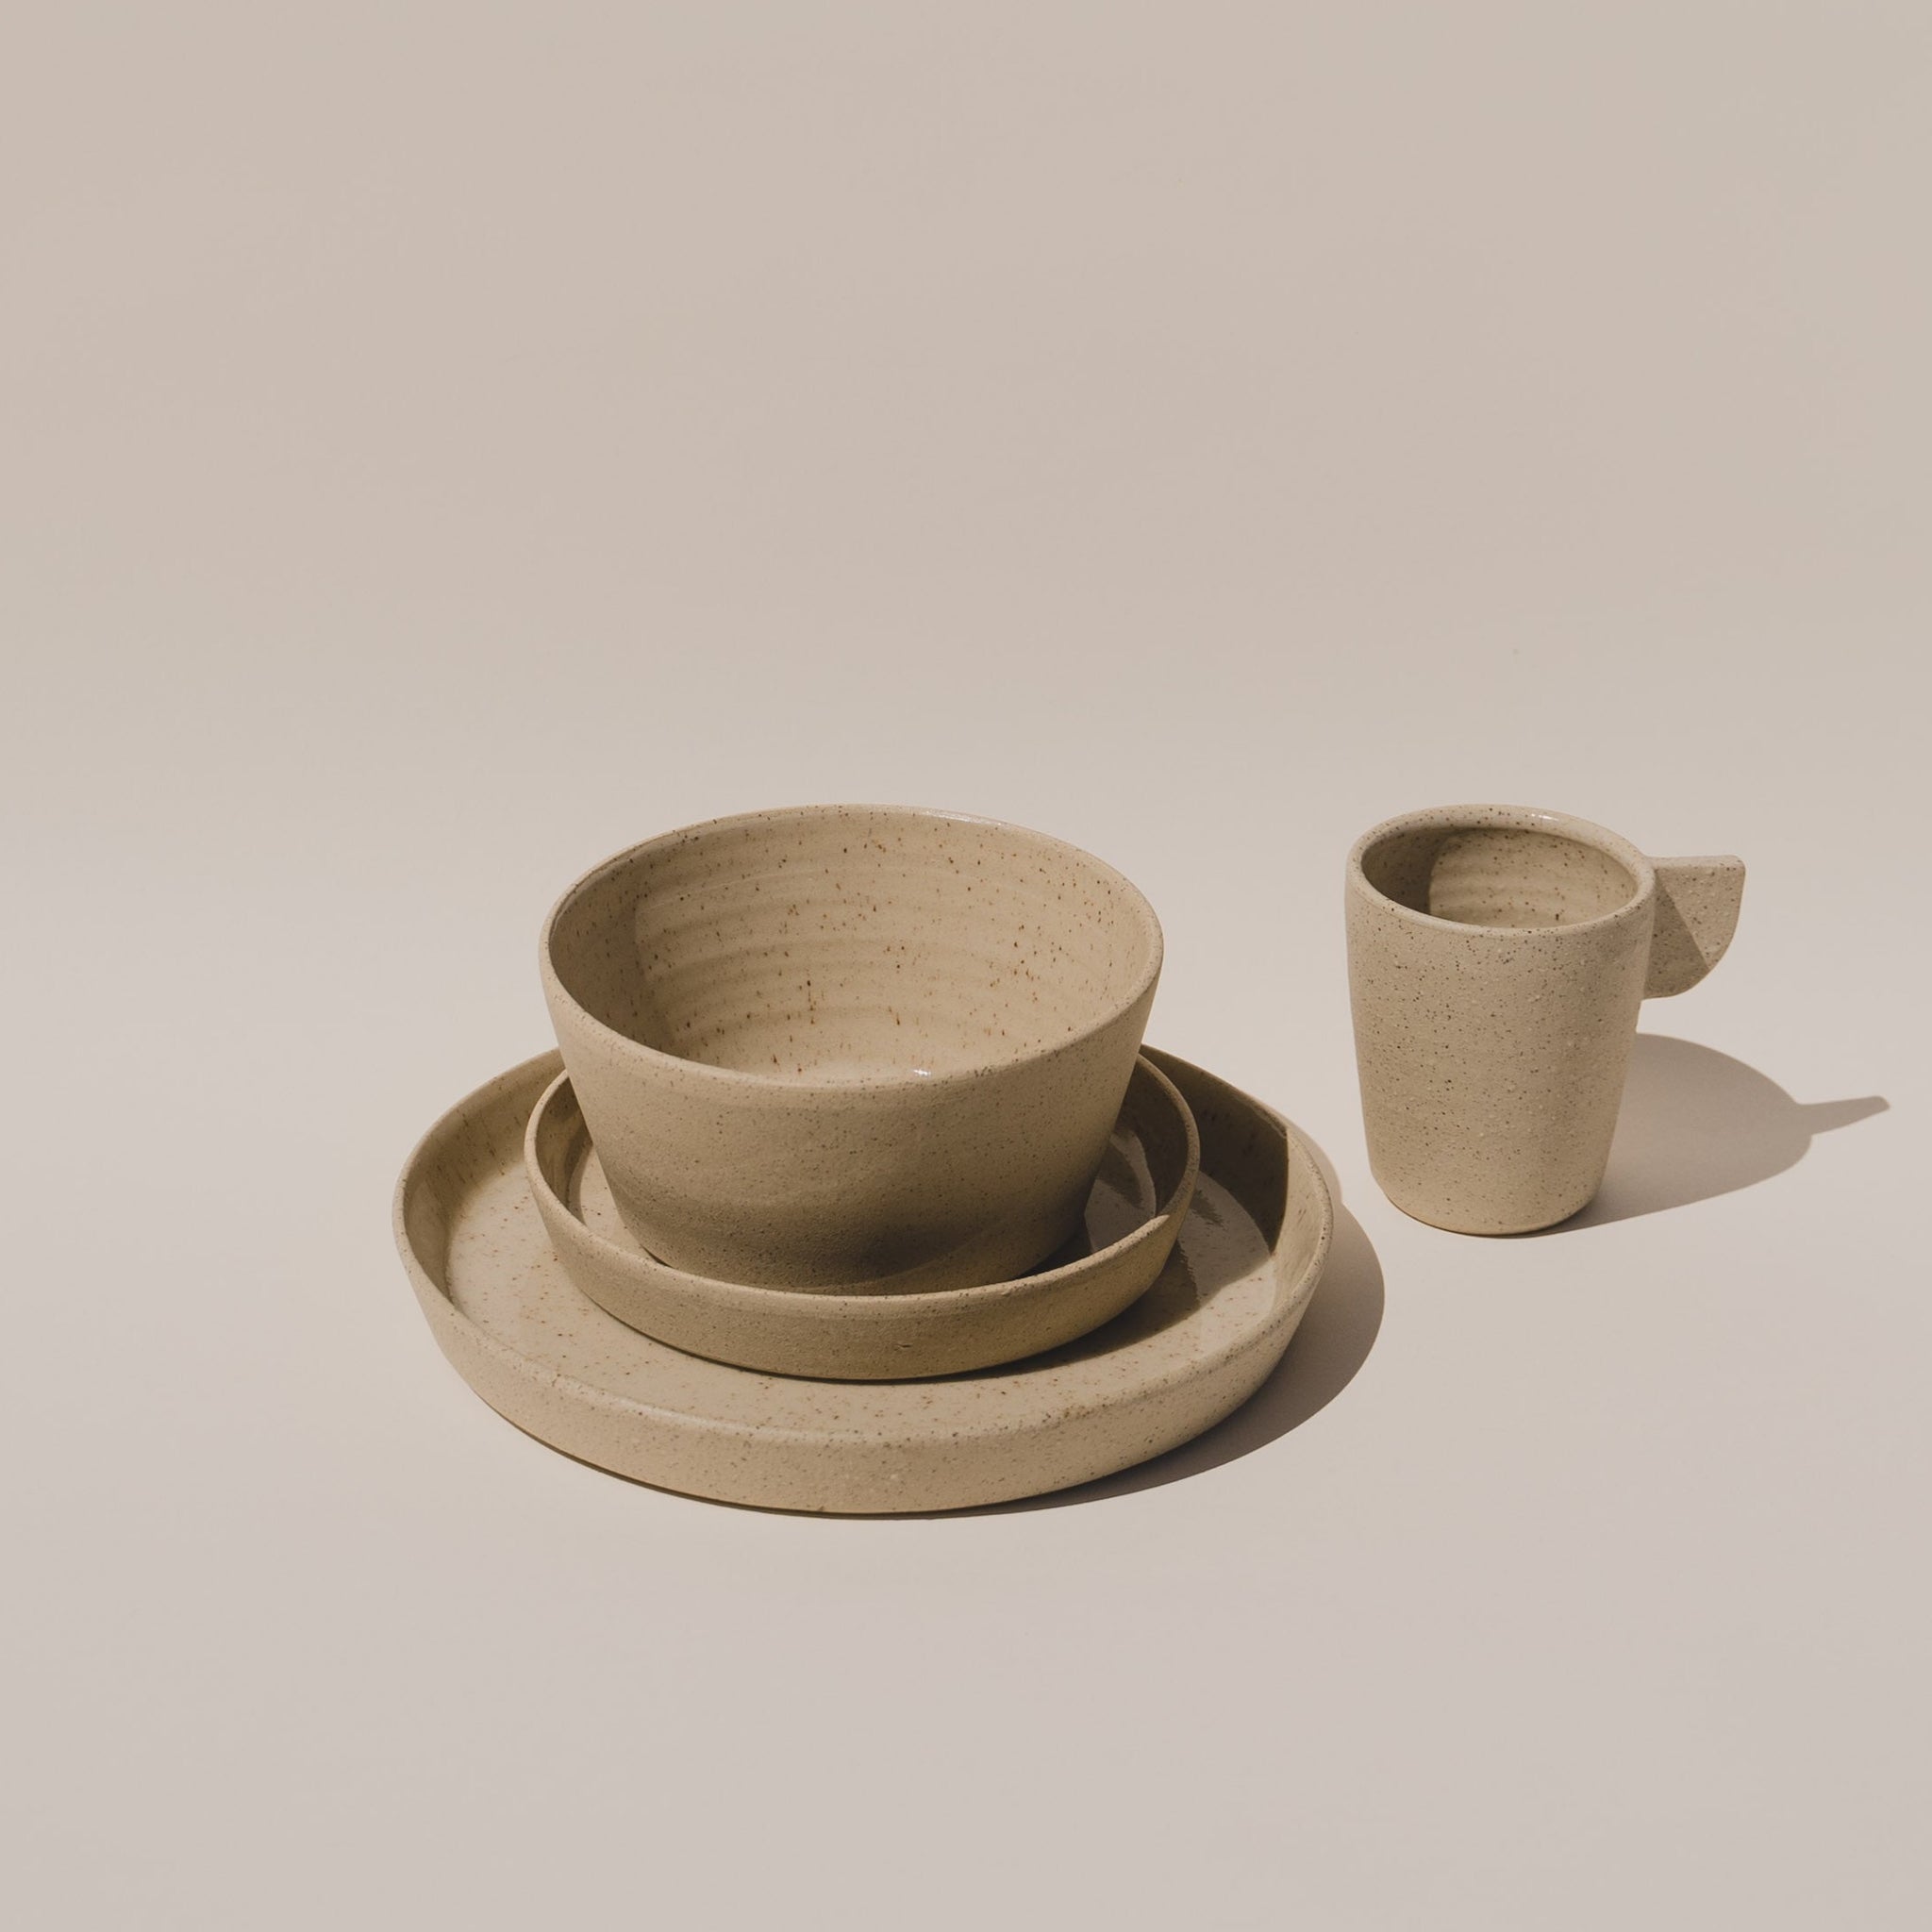 Ceramic Plate and Ceramic Dinner Set in natural sand colour